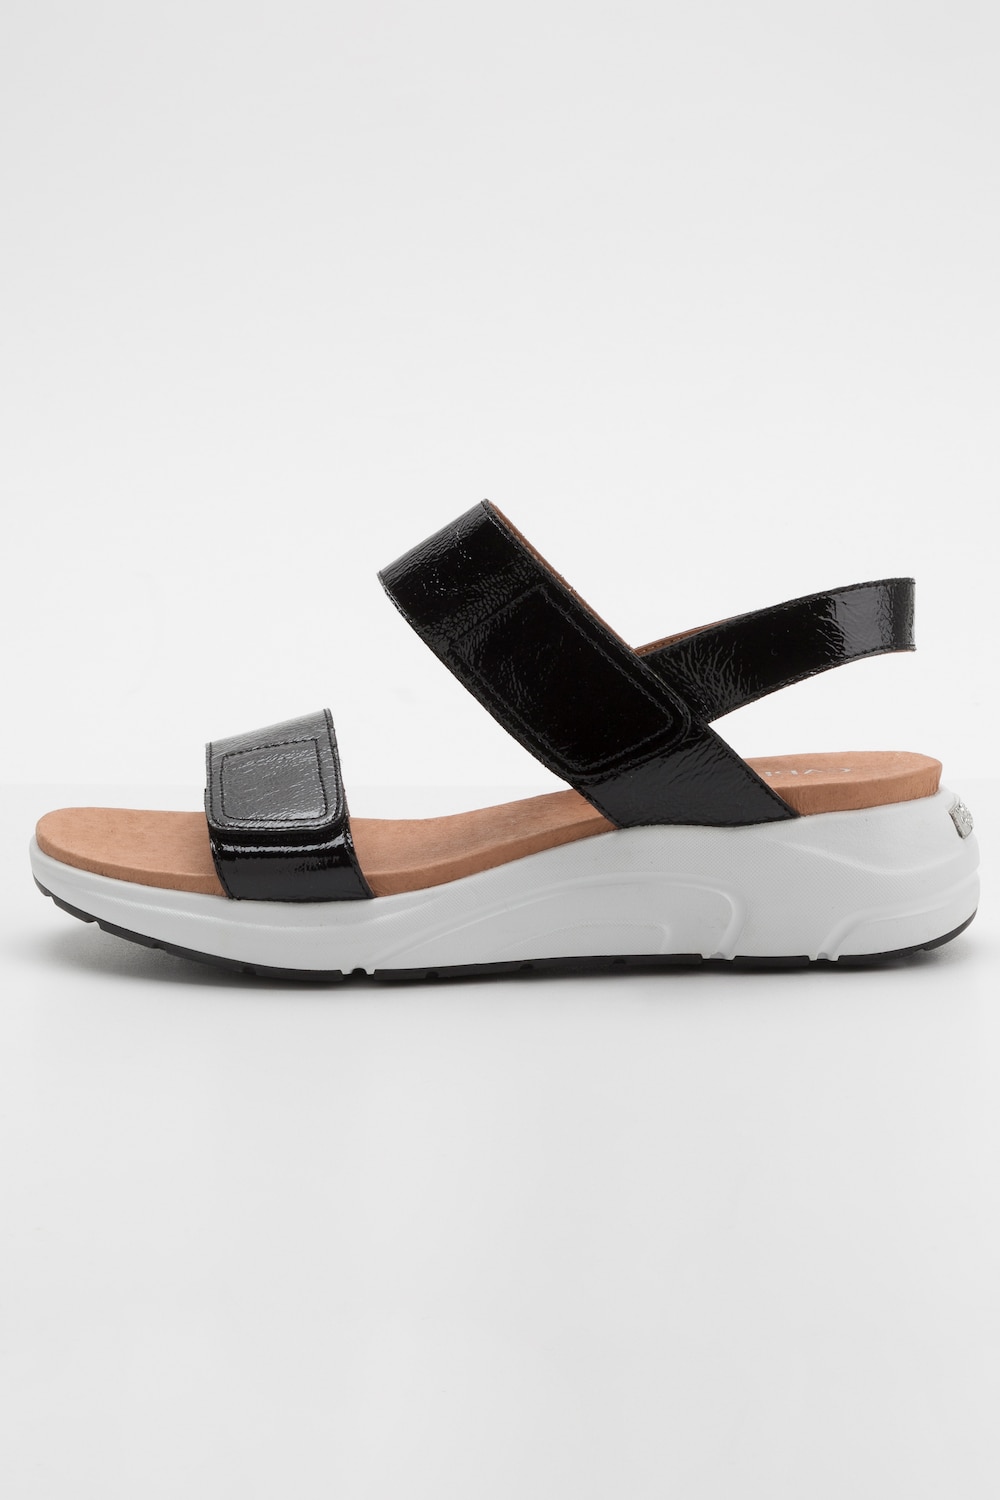 Plus Size Velcro Strap Patent Leather Sandals, Woman, black, size: 6,5, synthetic fibers/leather, Ulla Popken